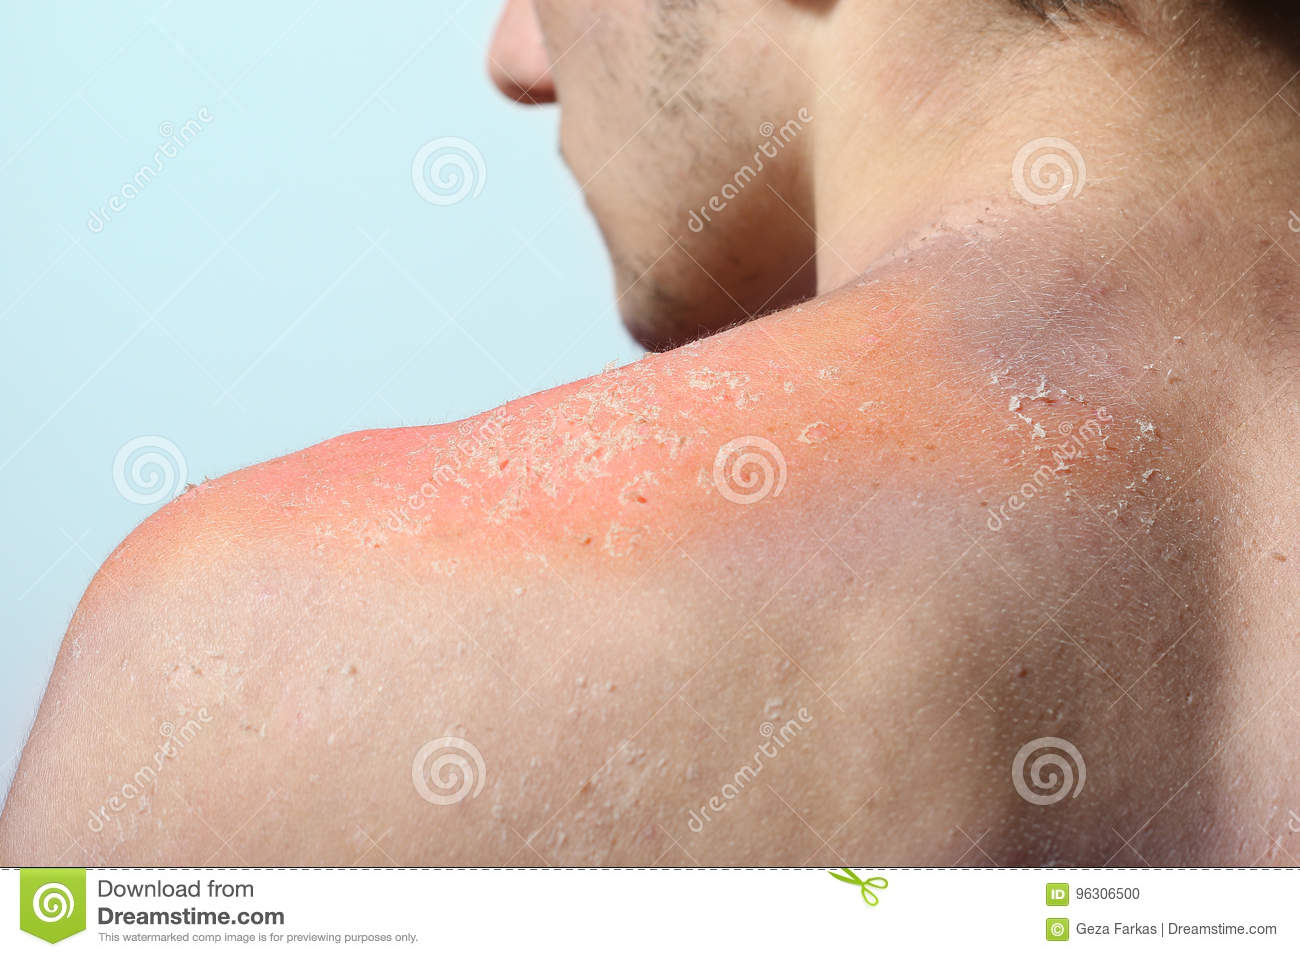 Sunscreens may increase sunburn